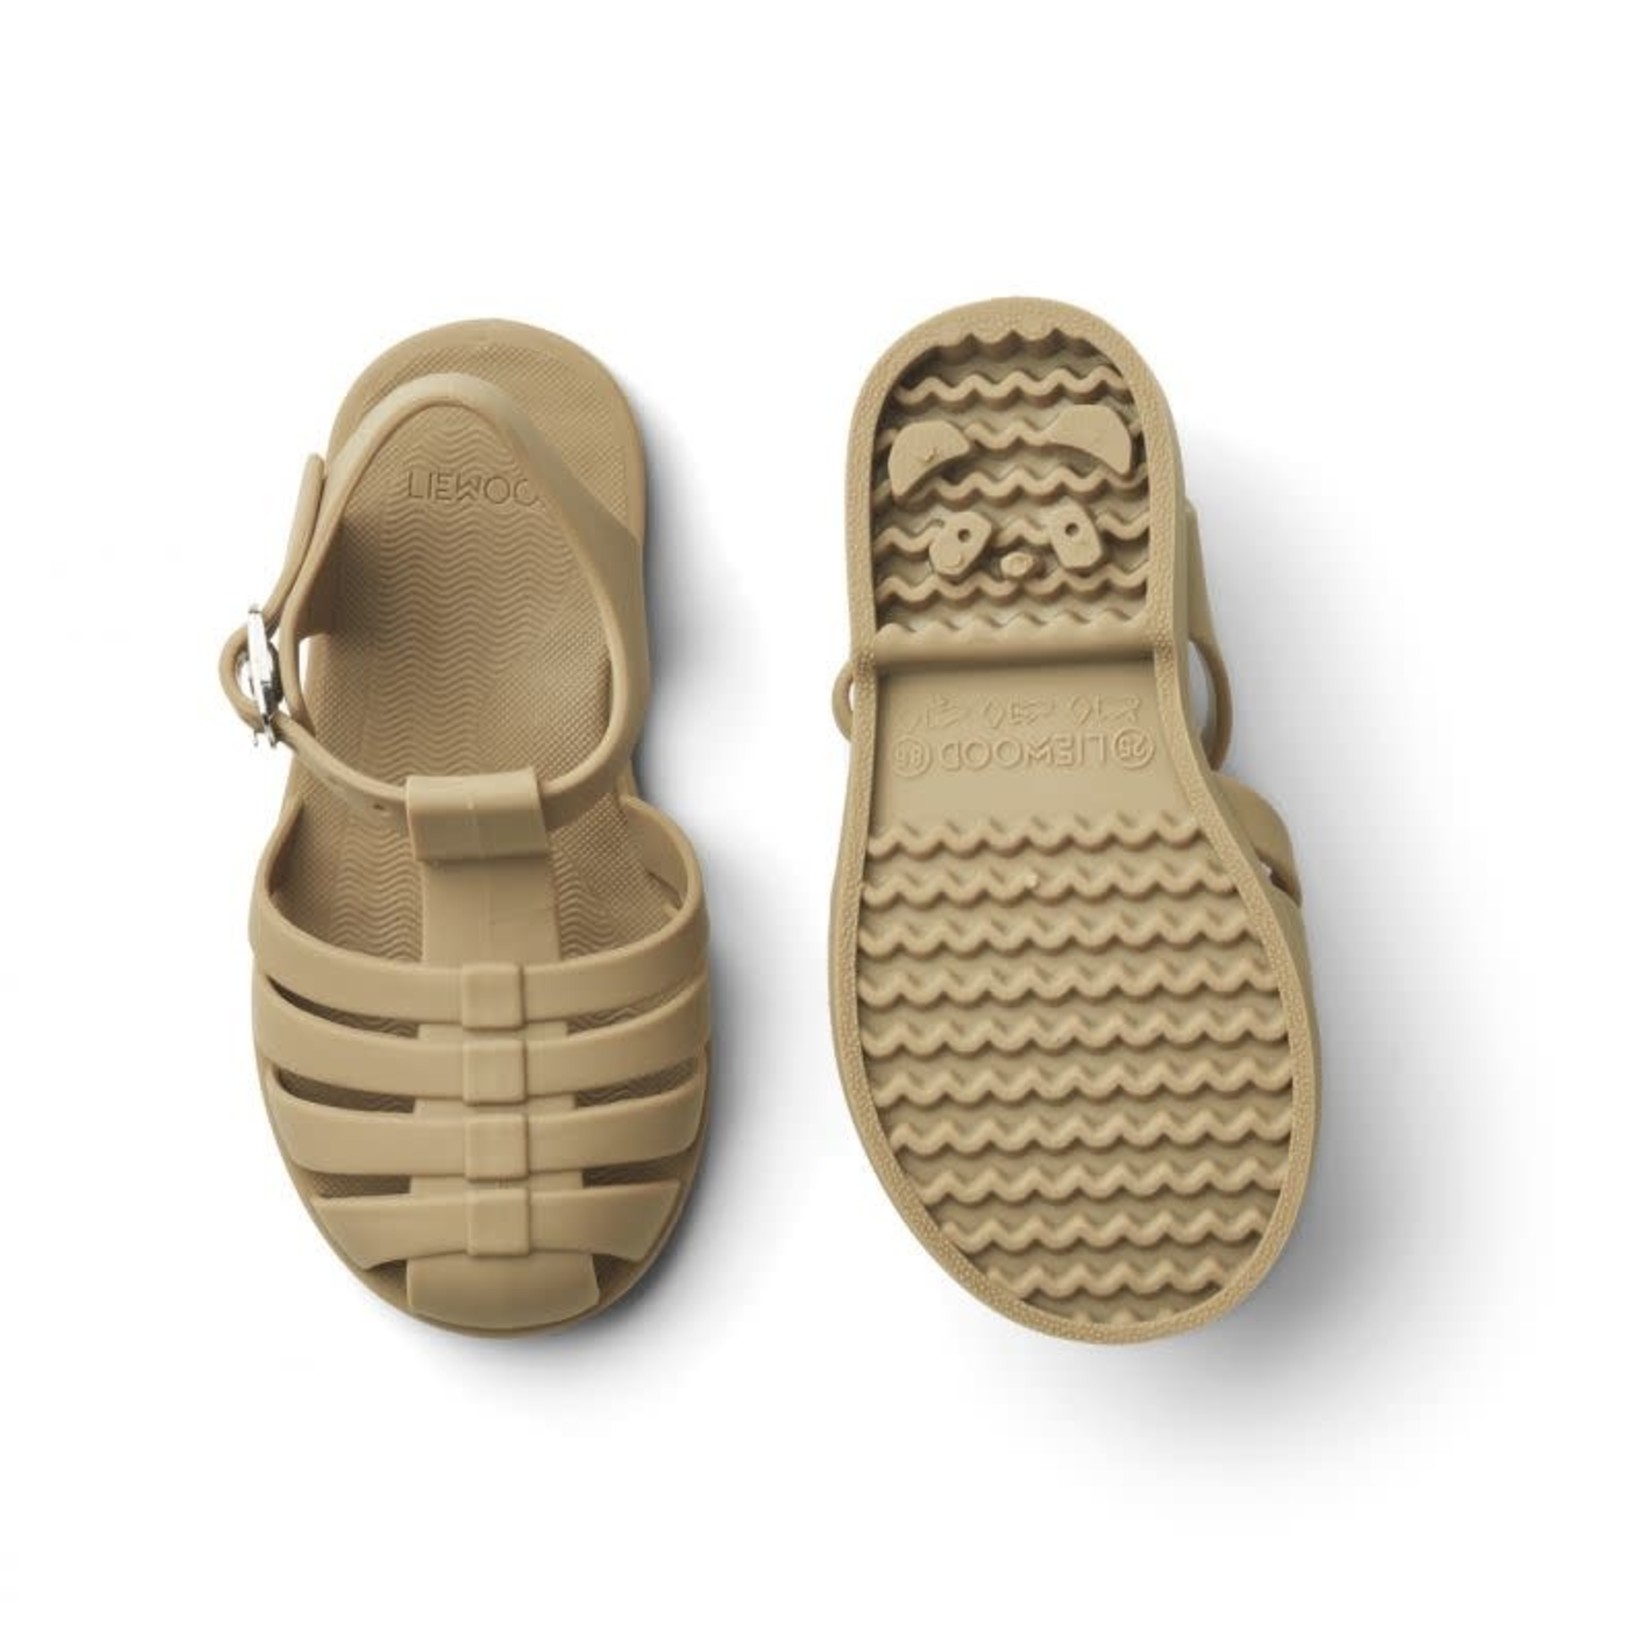 Liewood Liewood Bre sandals - Oat